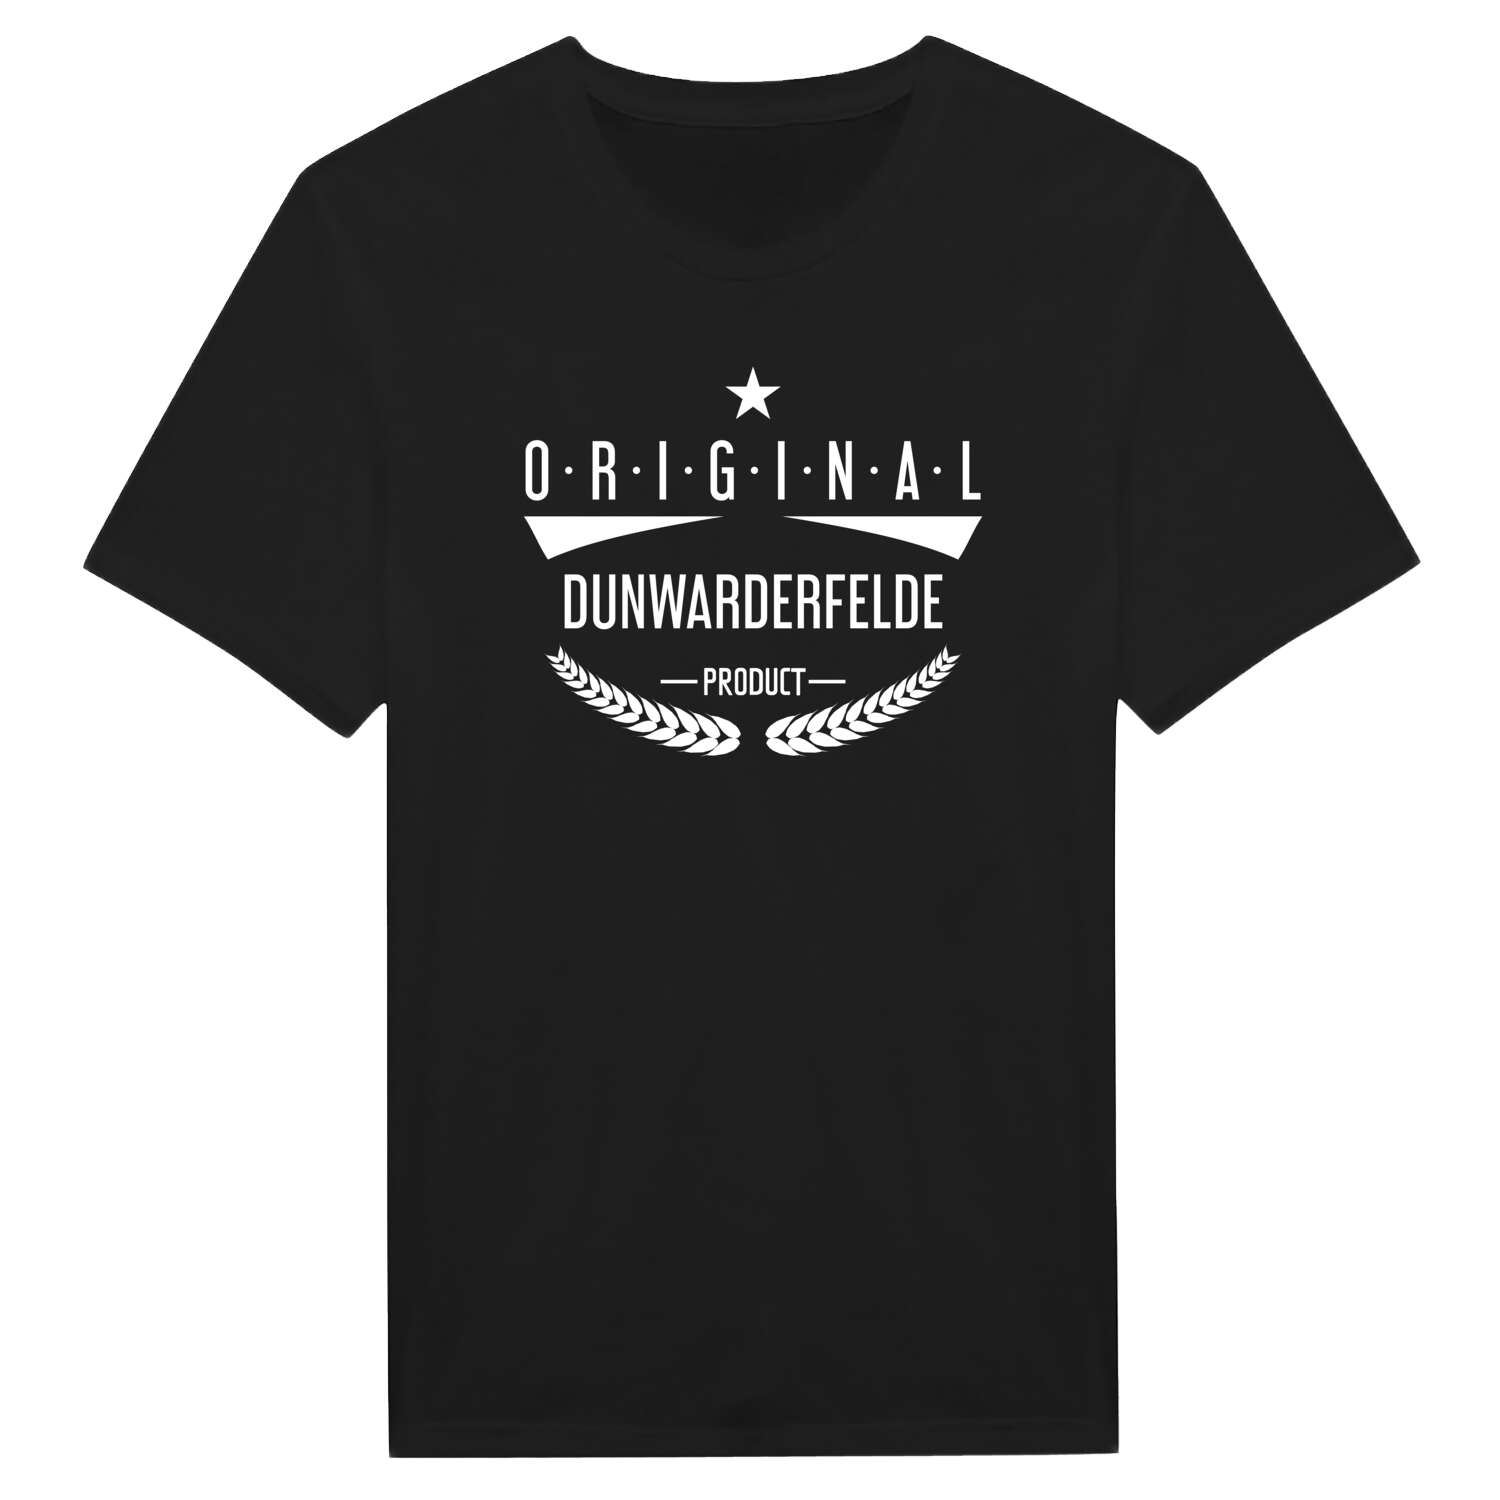 Dunwarderfelde T-Shirt »Original Product«